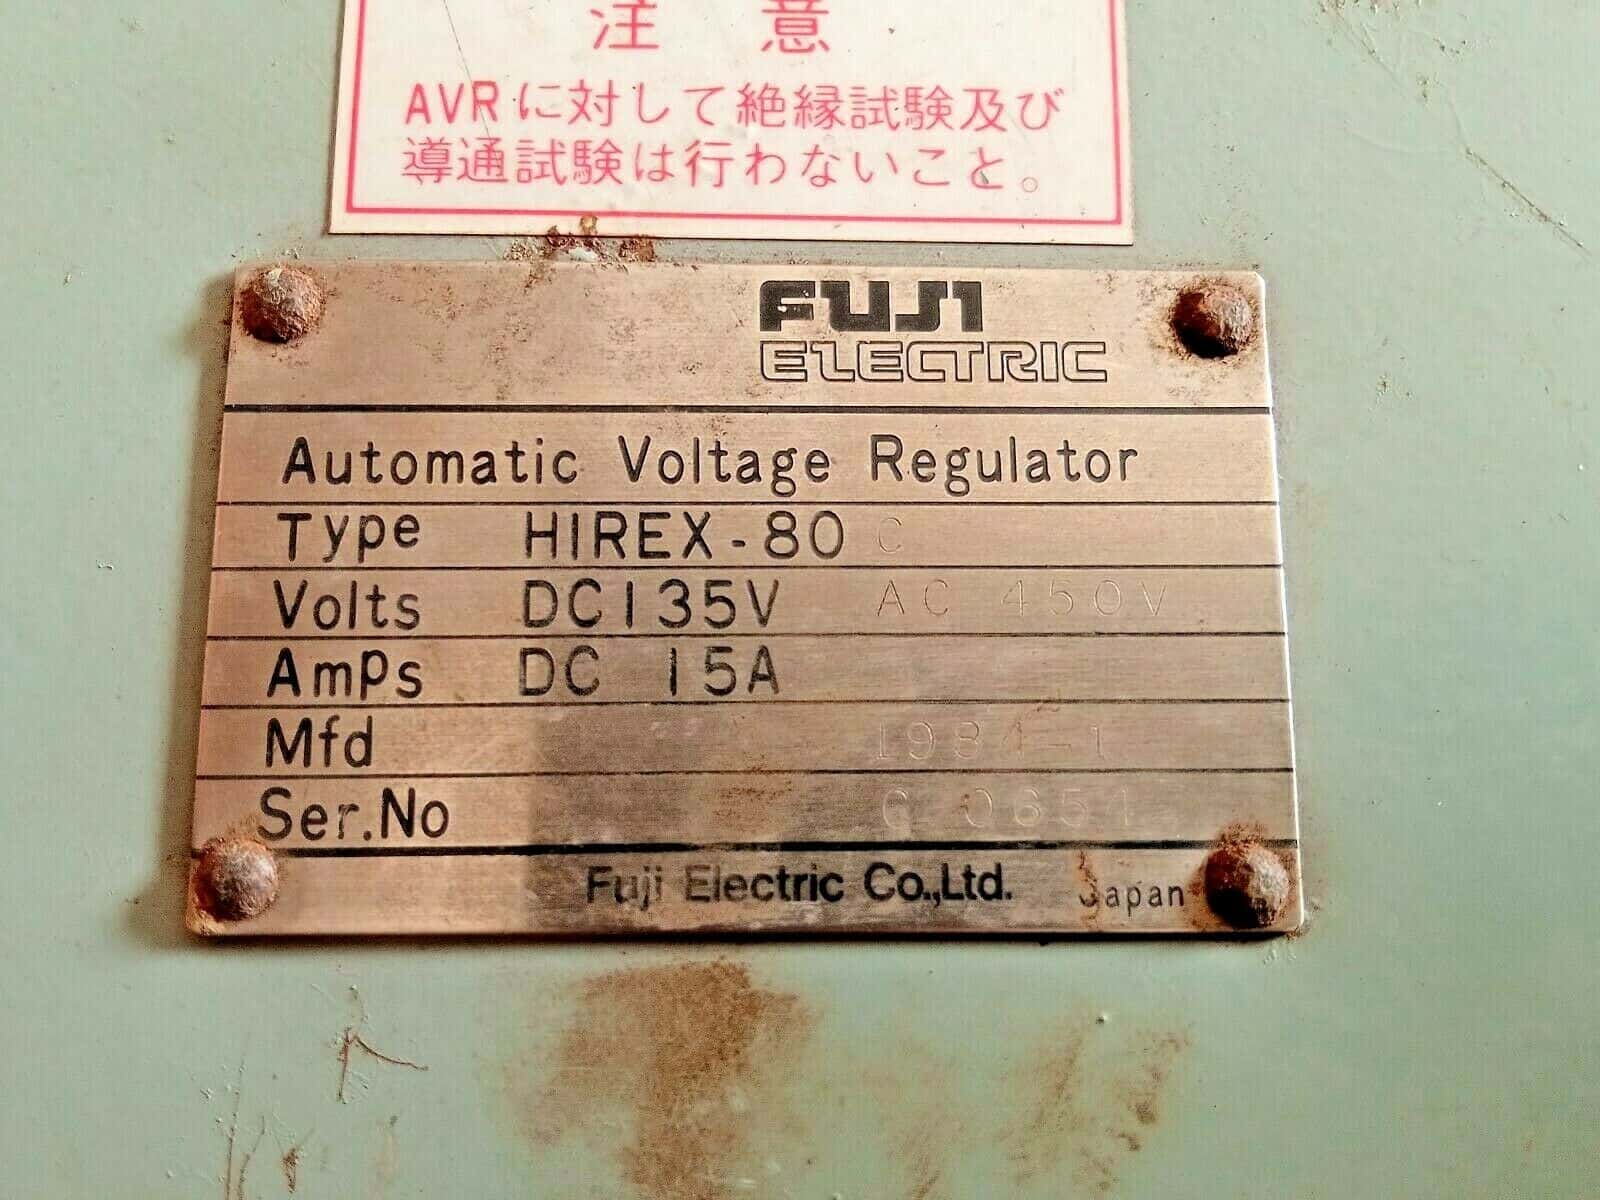 FUJI ELECTRIC AUTOMATIC VOLTAGE REGULATOR AVR TYPE : HIREX-80C